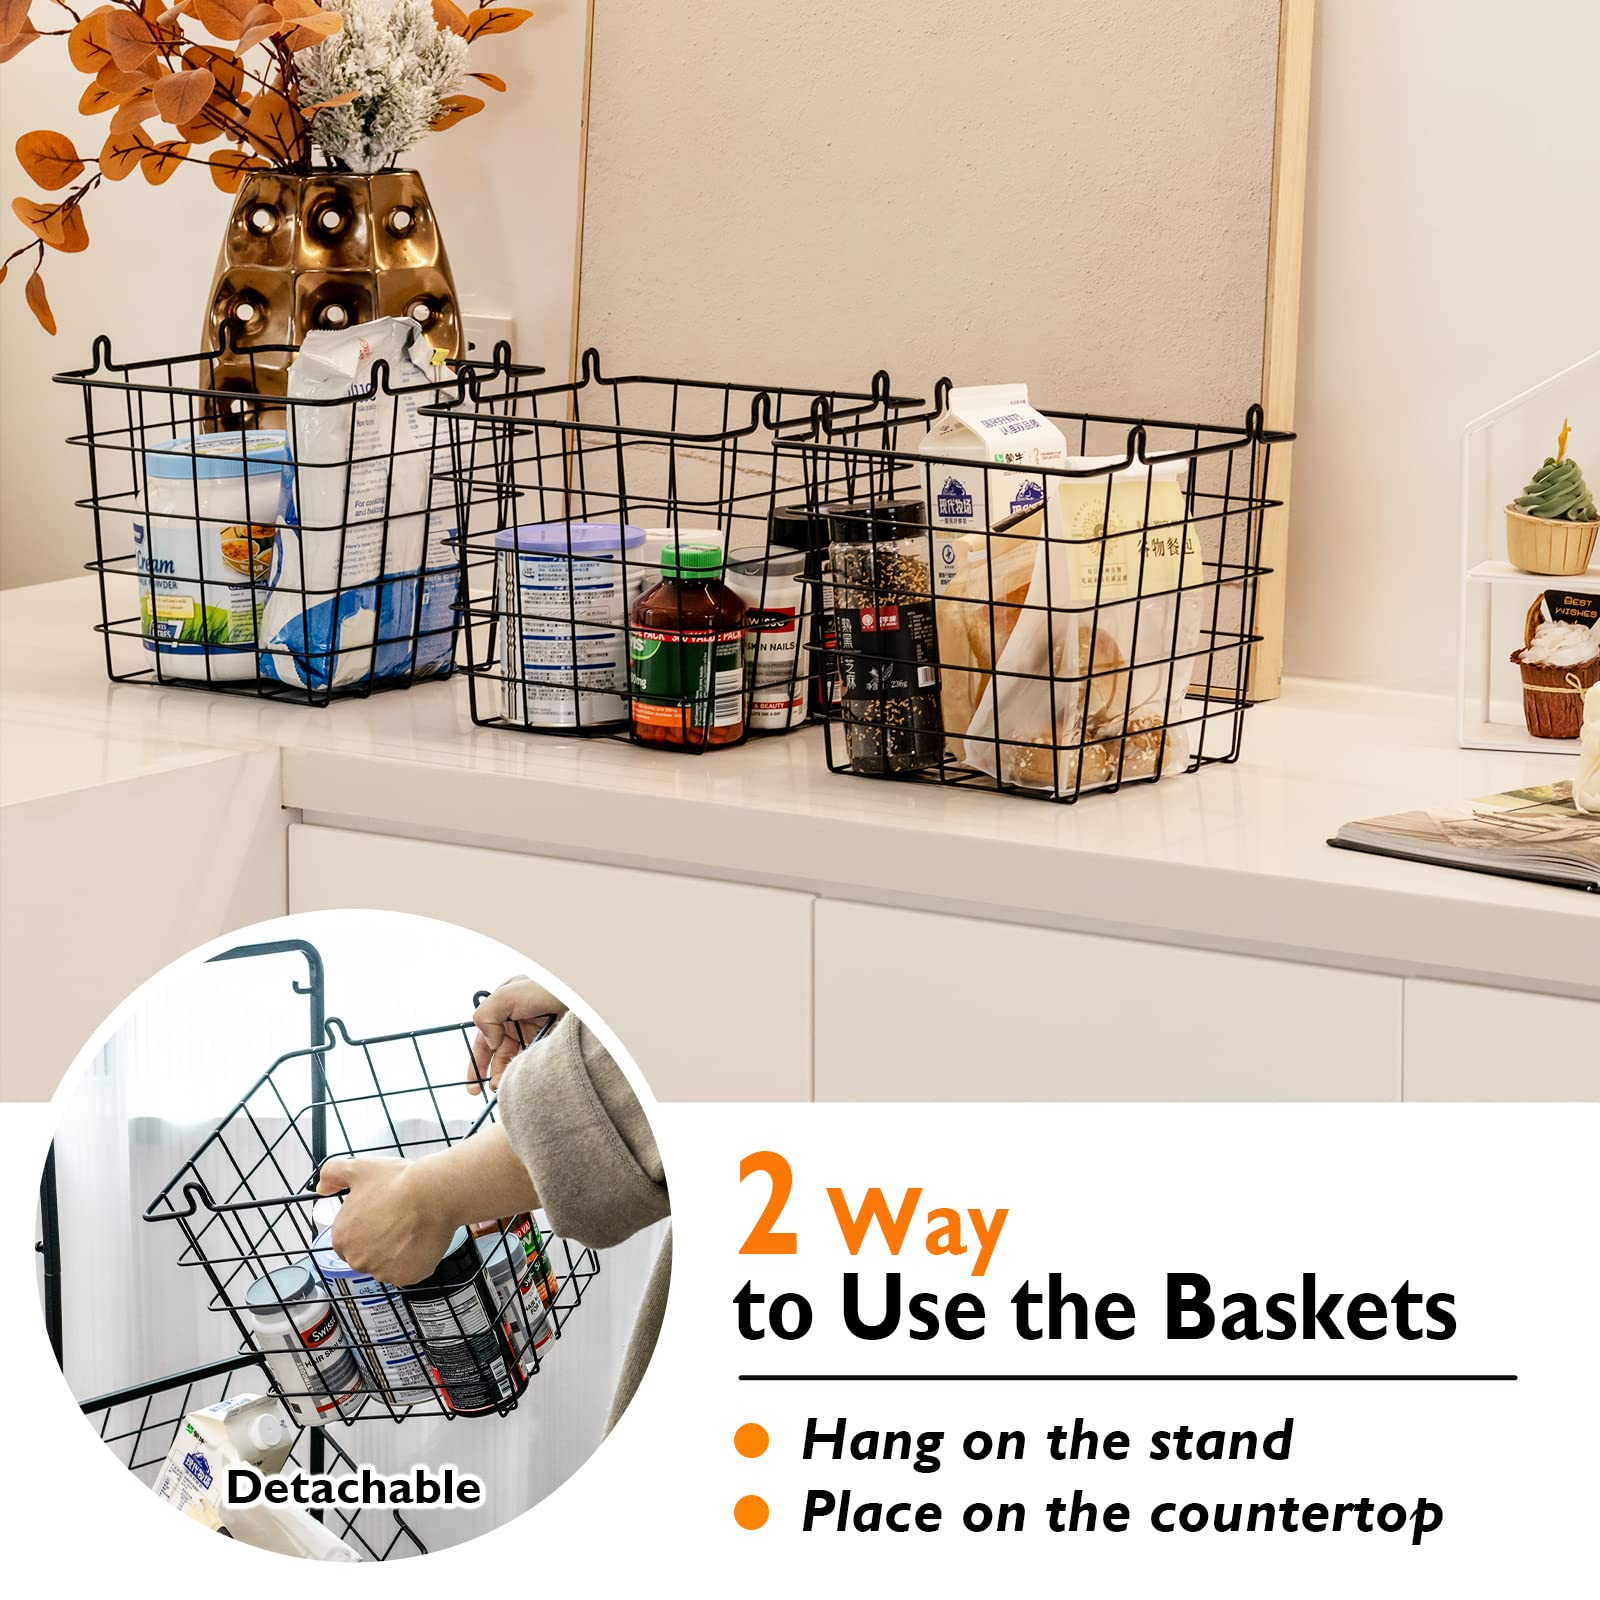 Giantex 3-Tier Wire Basket Stand